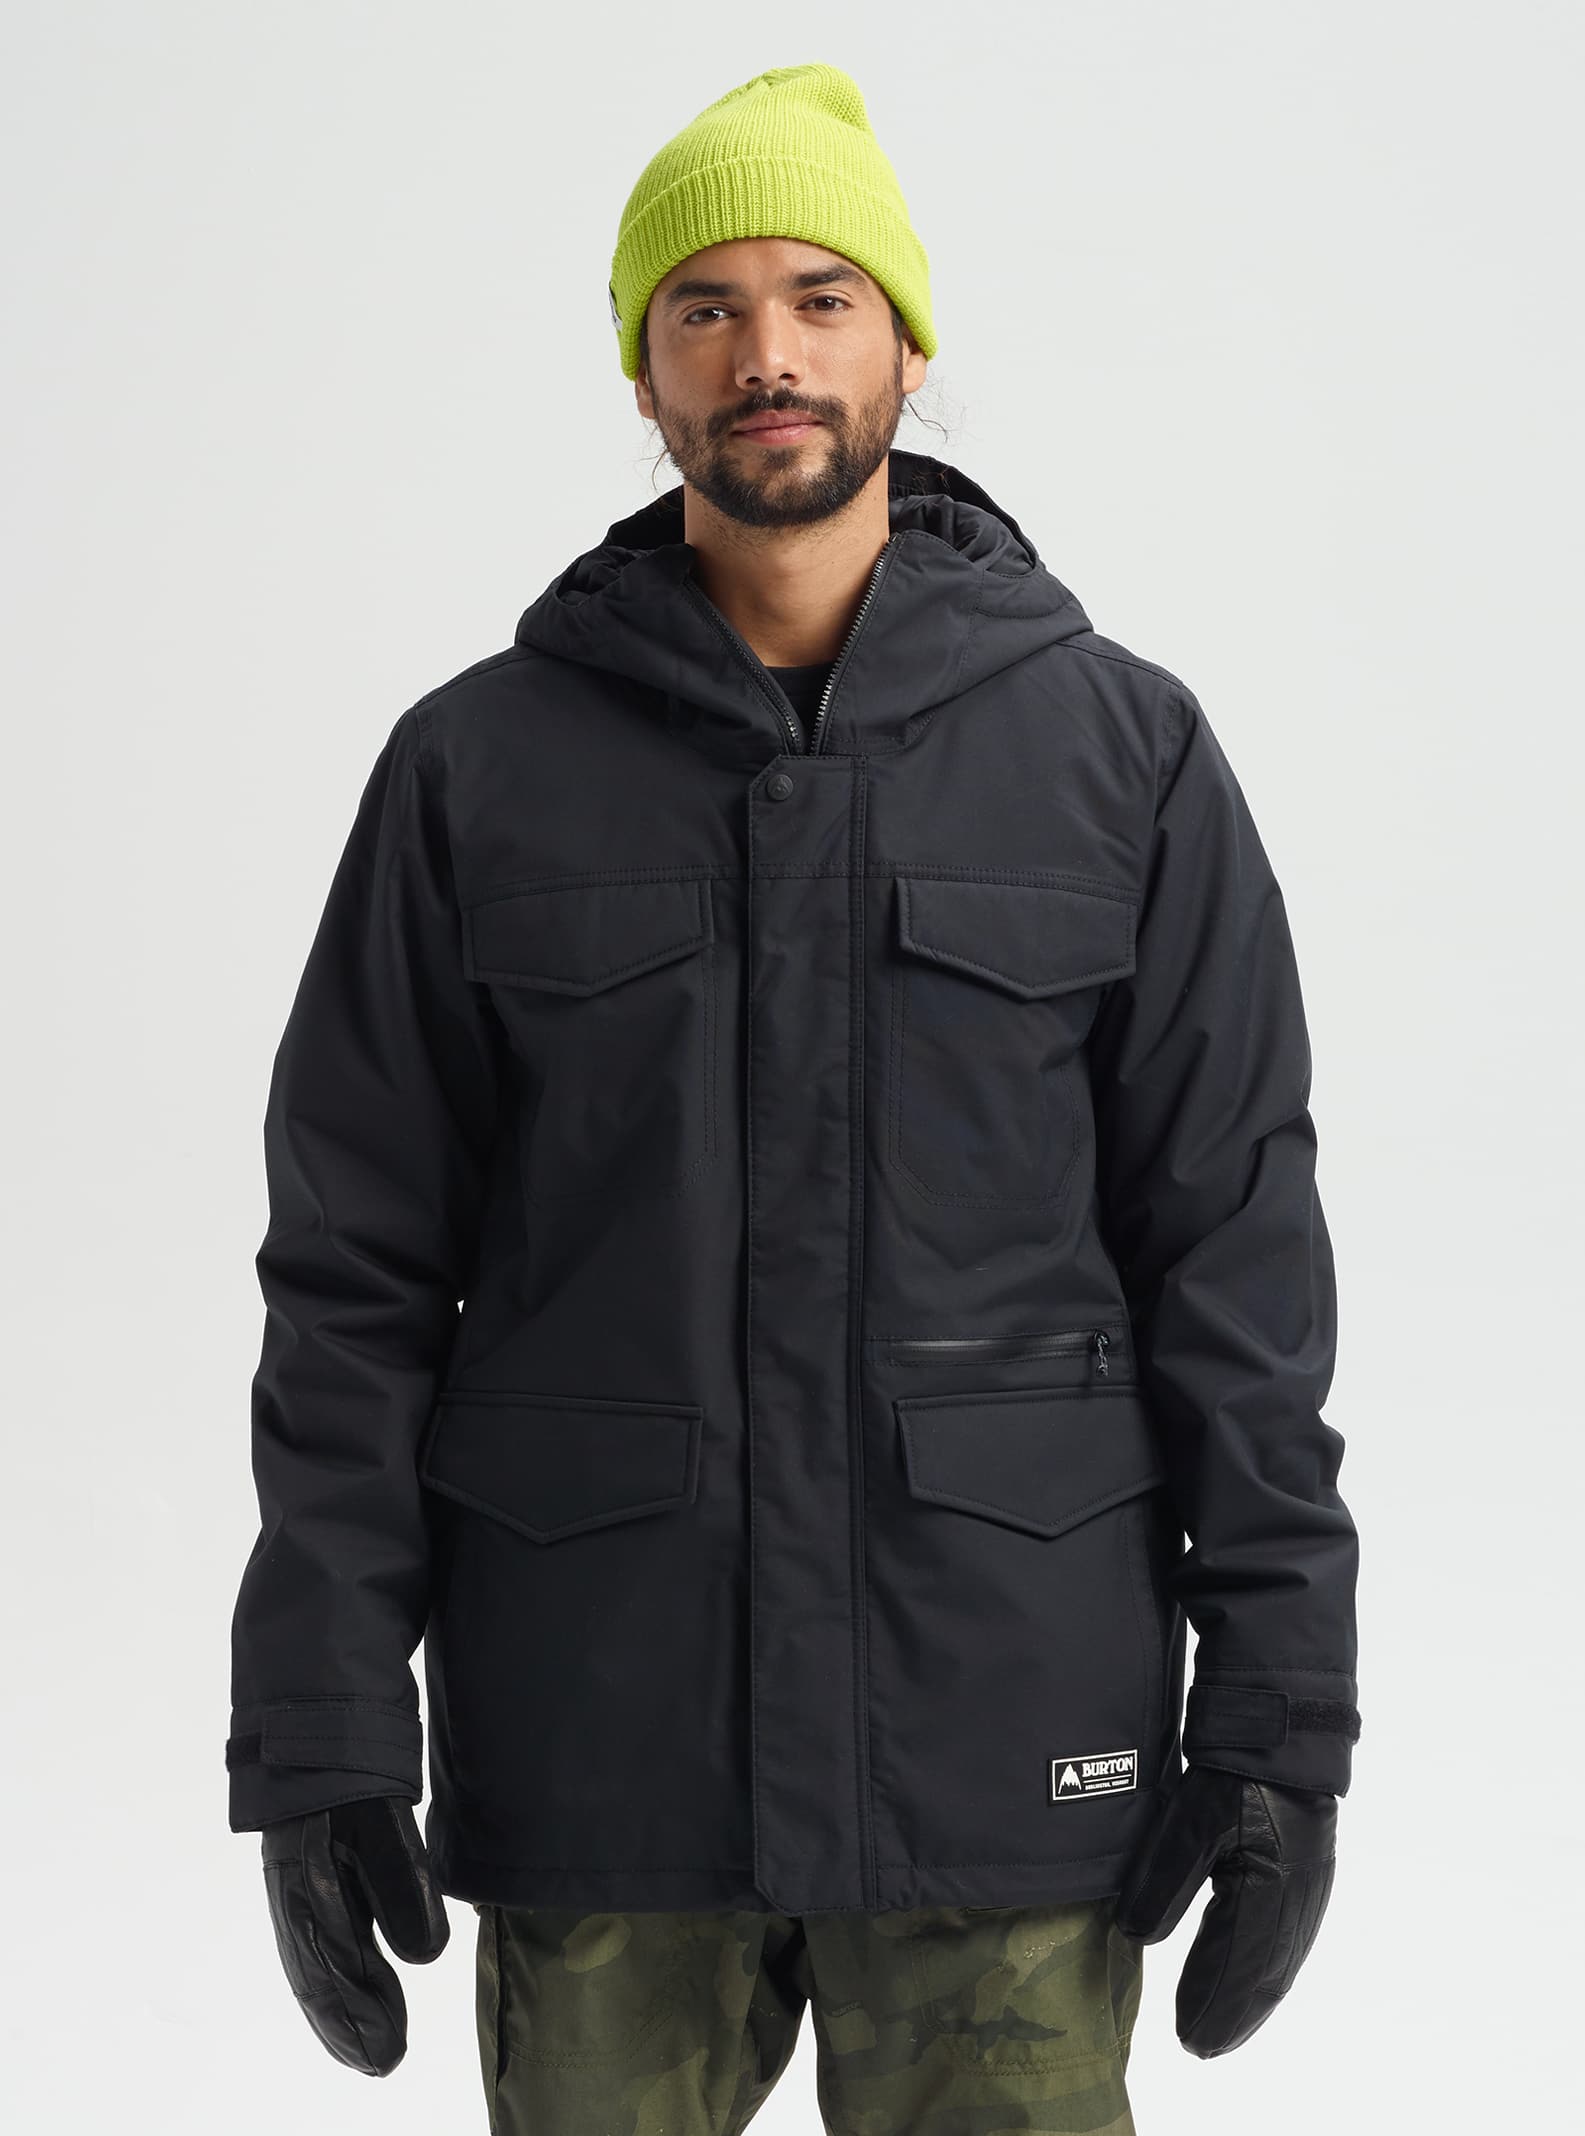 Analog Danny Signature Jacket Mens Snowboard Coat Waterproof Burton Insulated S 